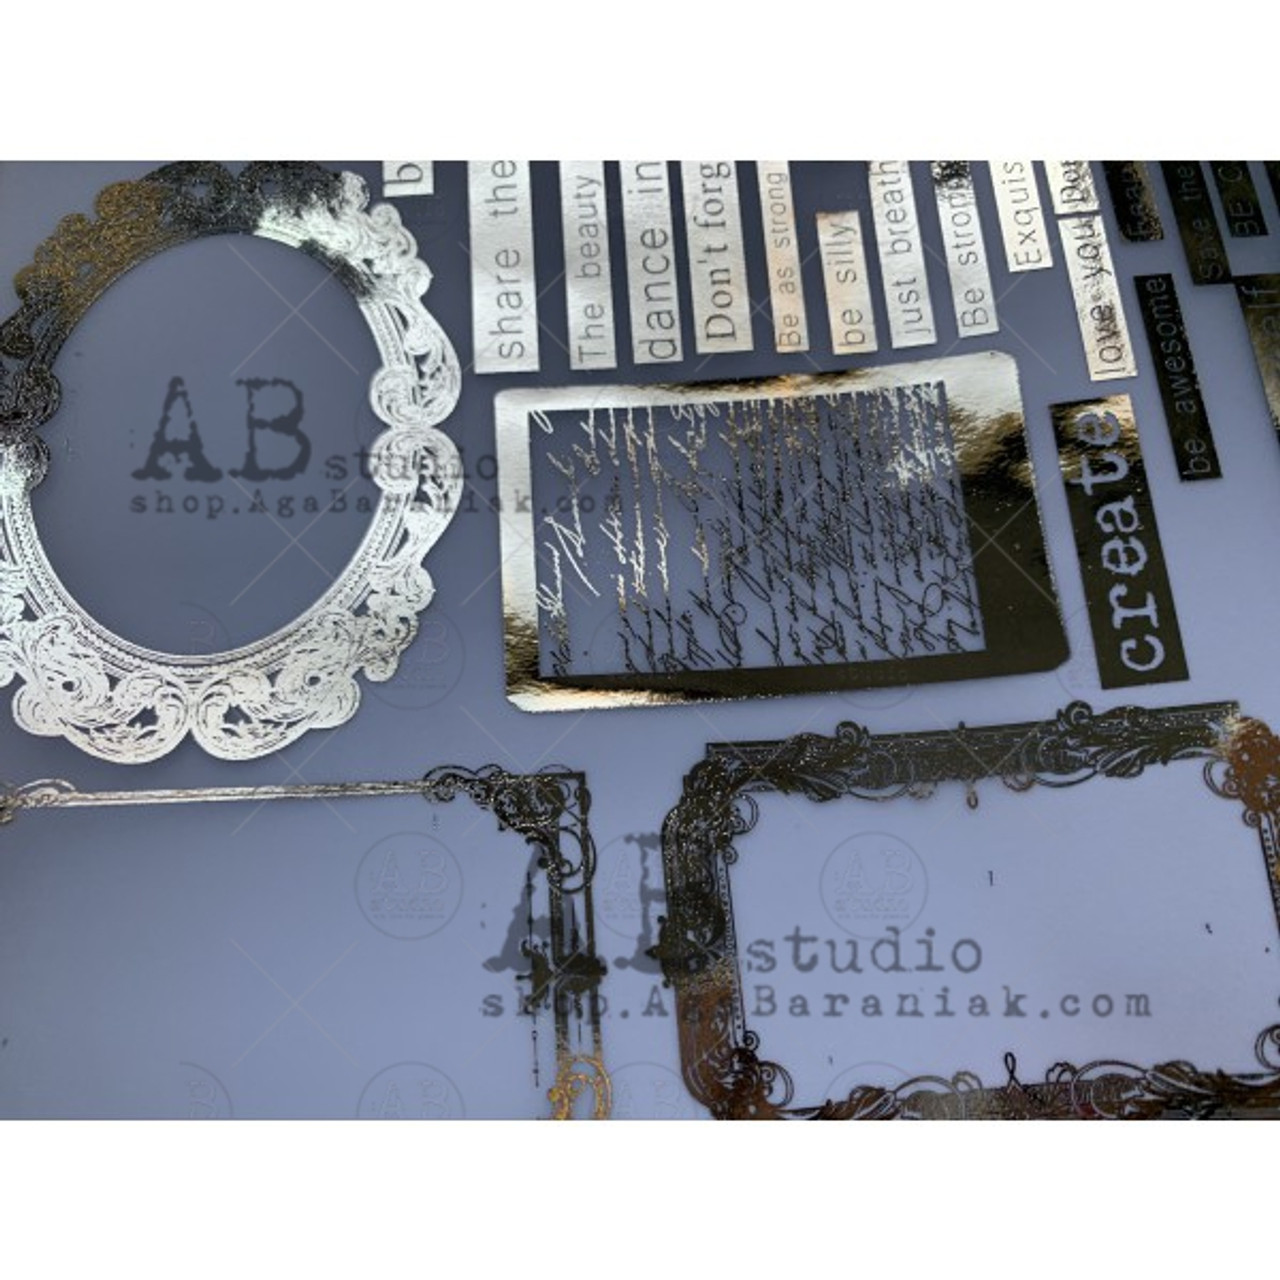 AB Studios Gold Vellum Paper Frames and Quotes